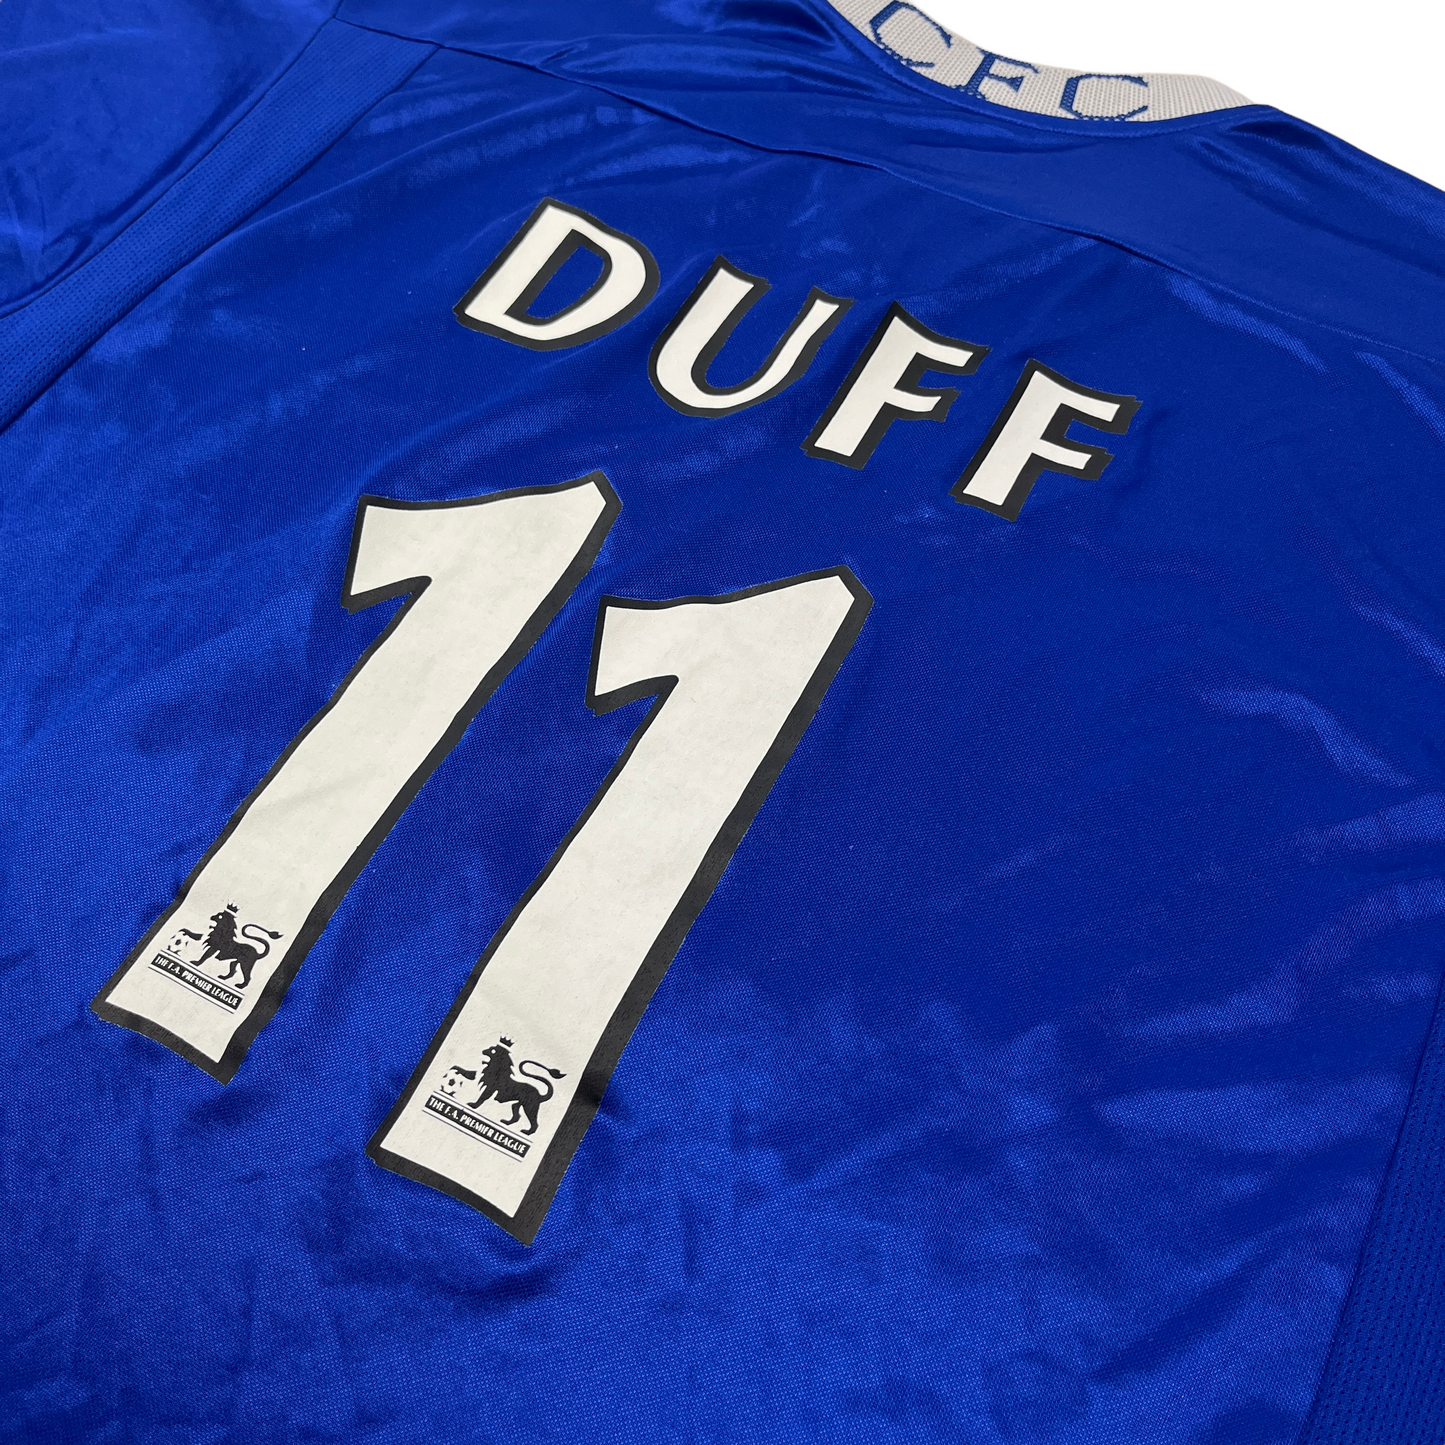 01572 Umbro FC Chelsea Damian Duff 2005 Home Jersey